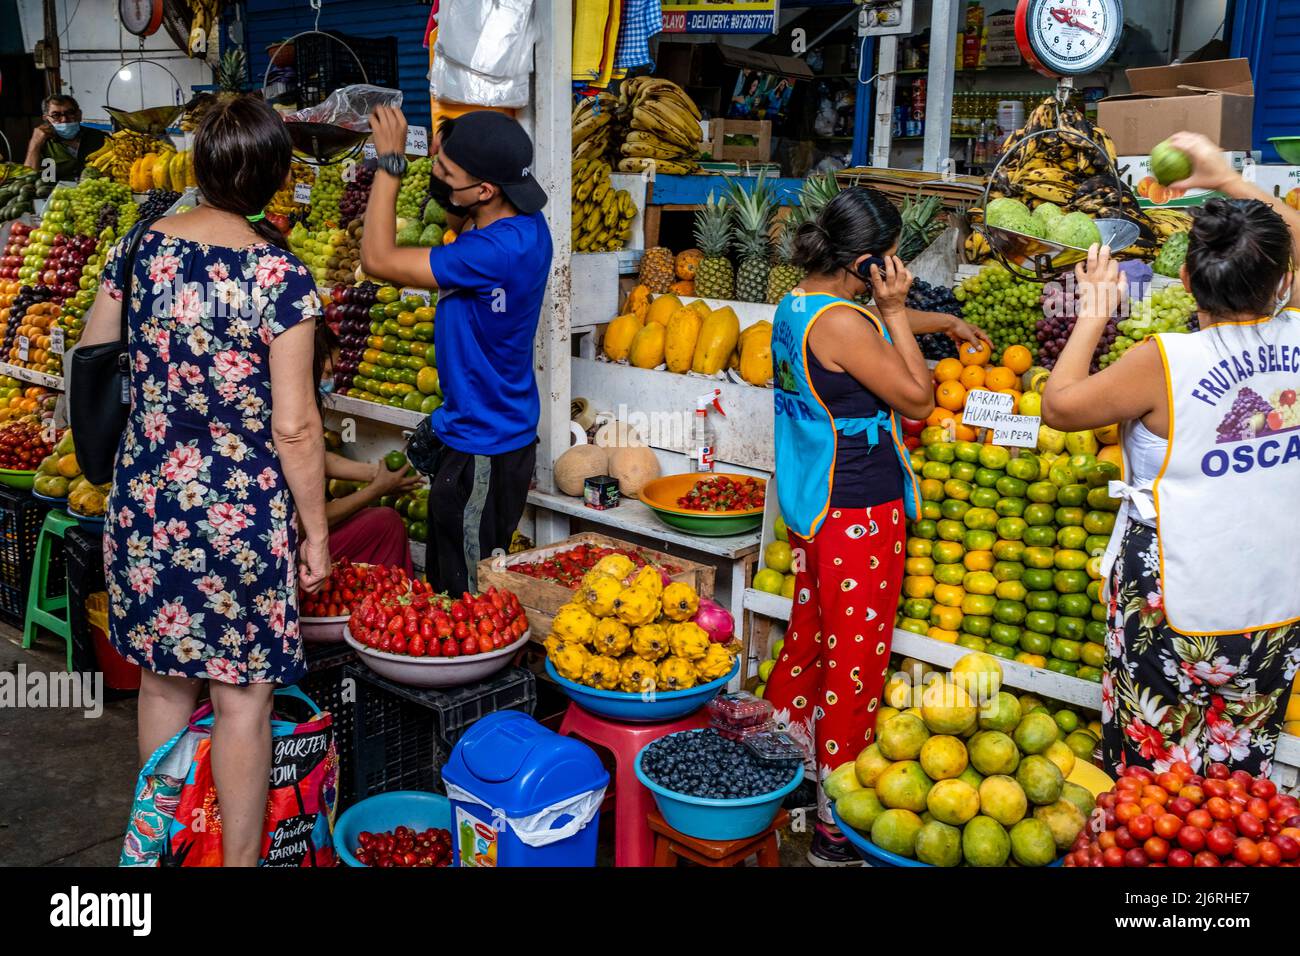 A Colourful Fruit Stall At The Mercado Modelo, Chiclayo, Lambayeque Region, Peru. Stock Photo